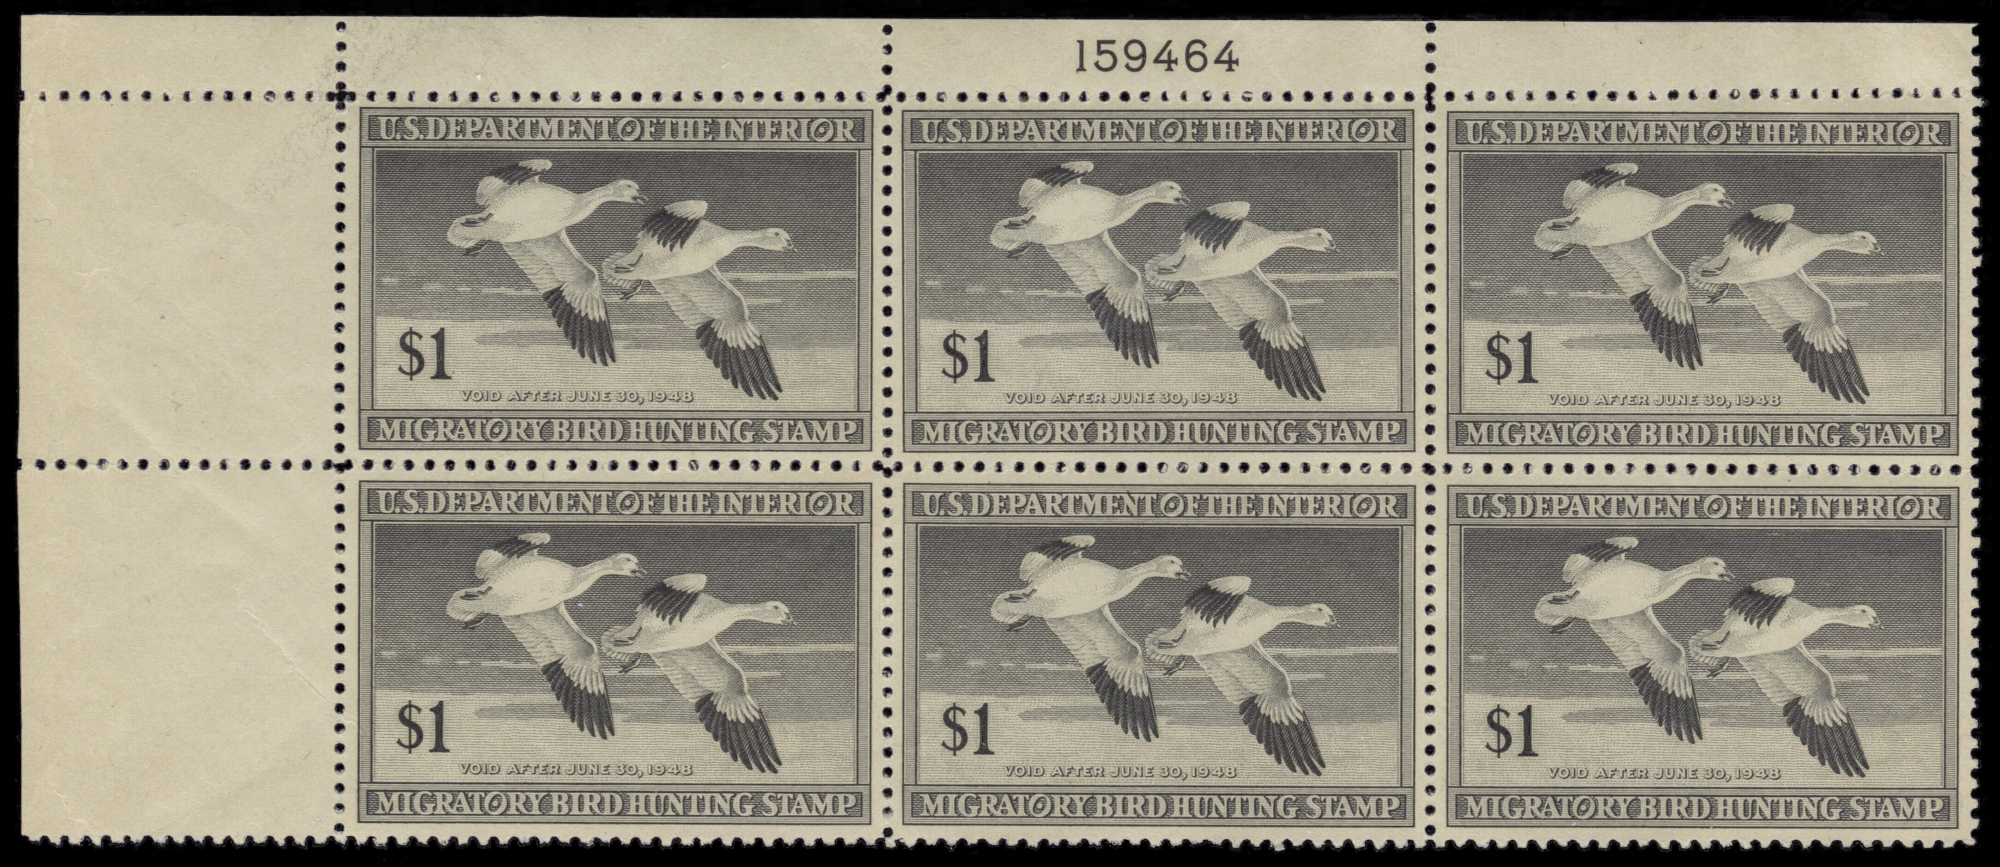 RW14 (1947-48) Plate Number Block